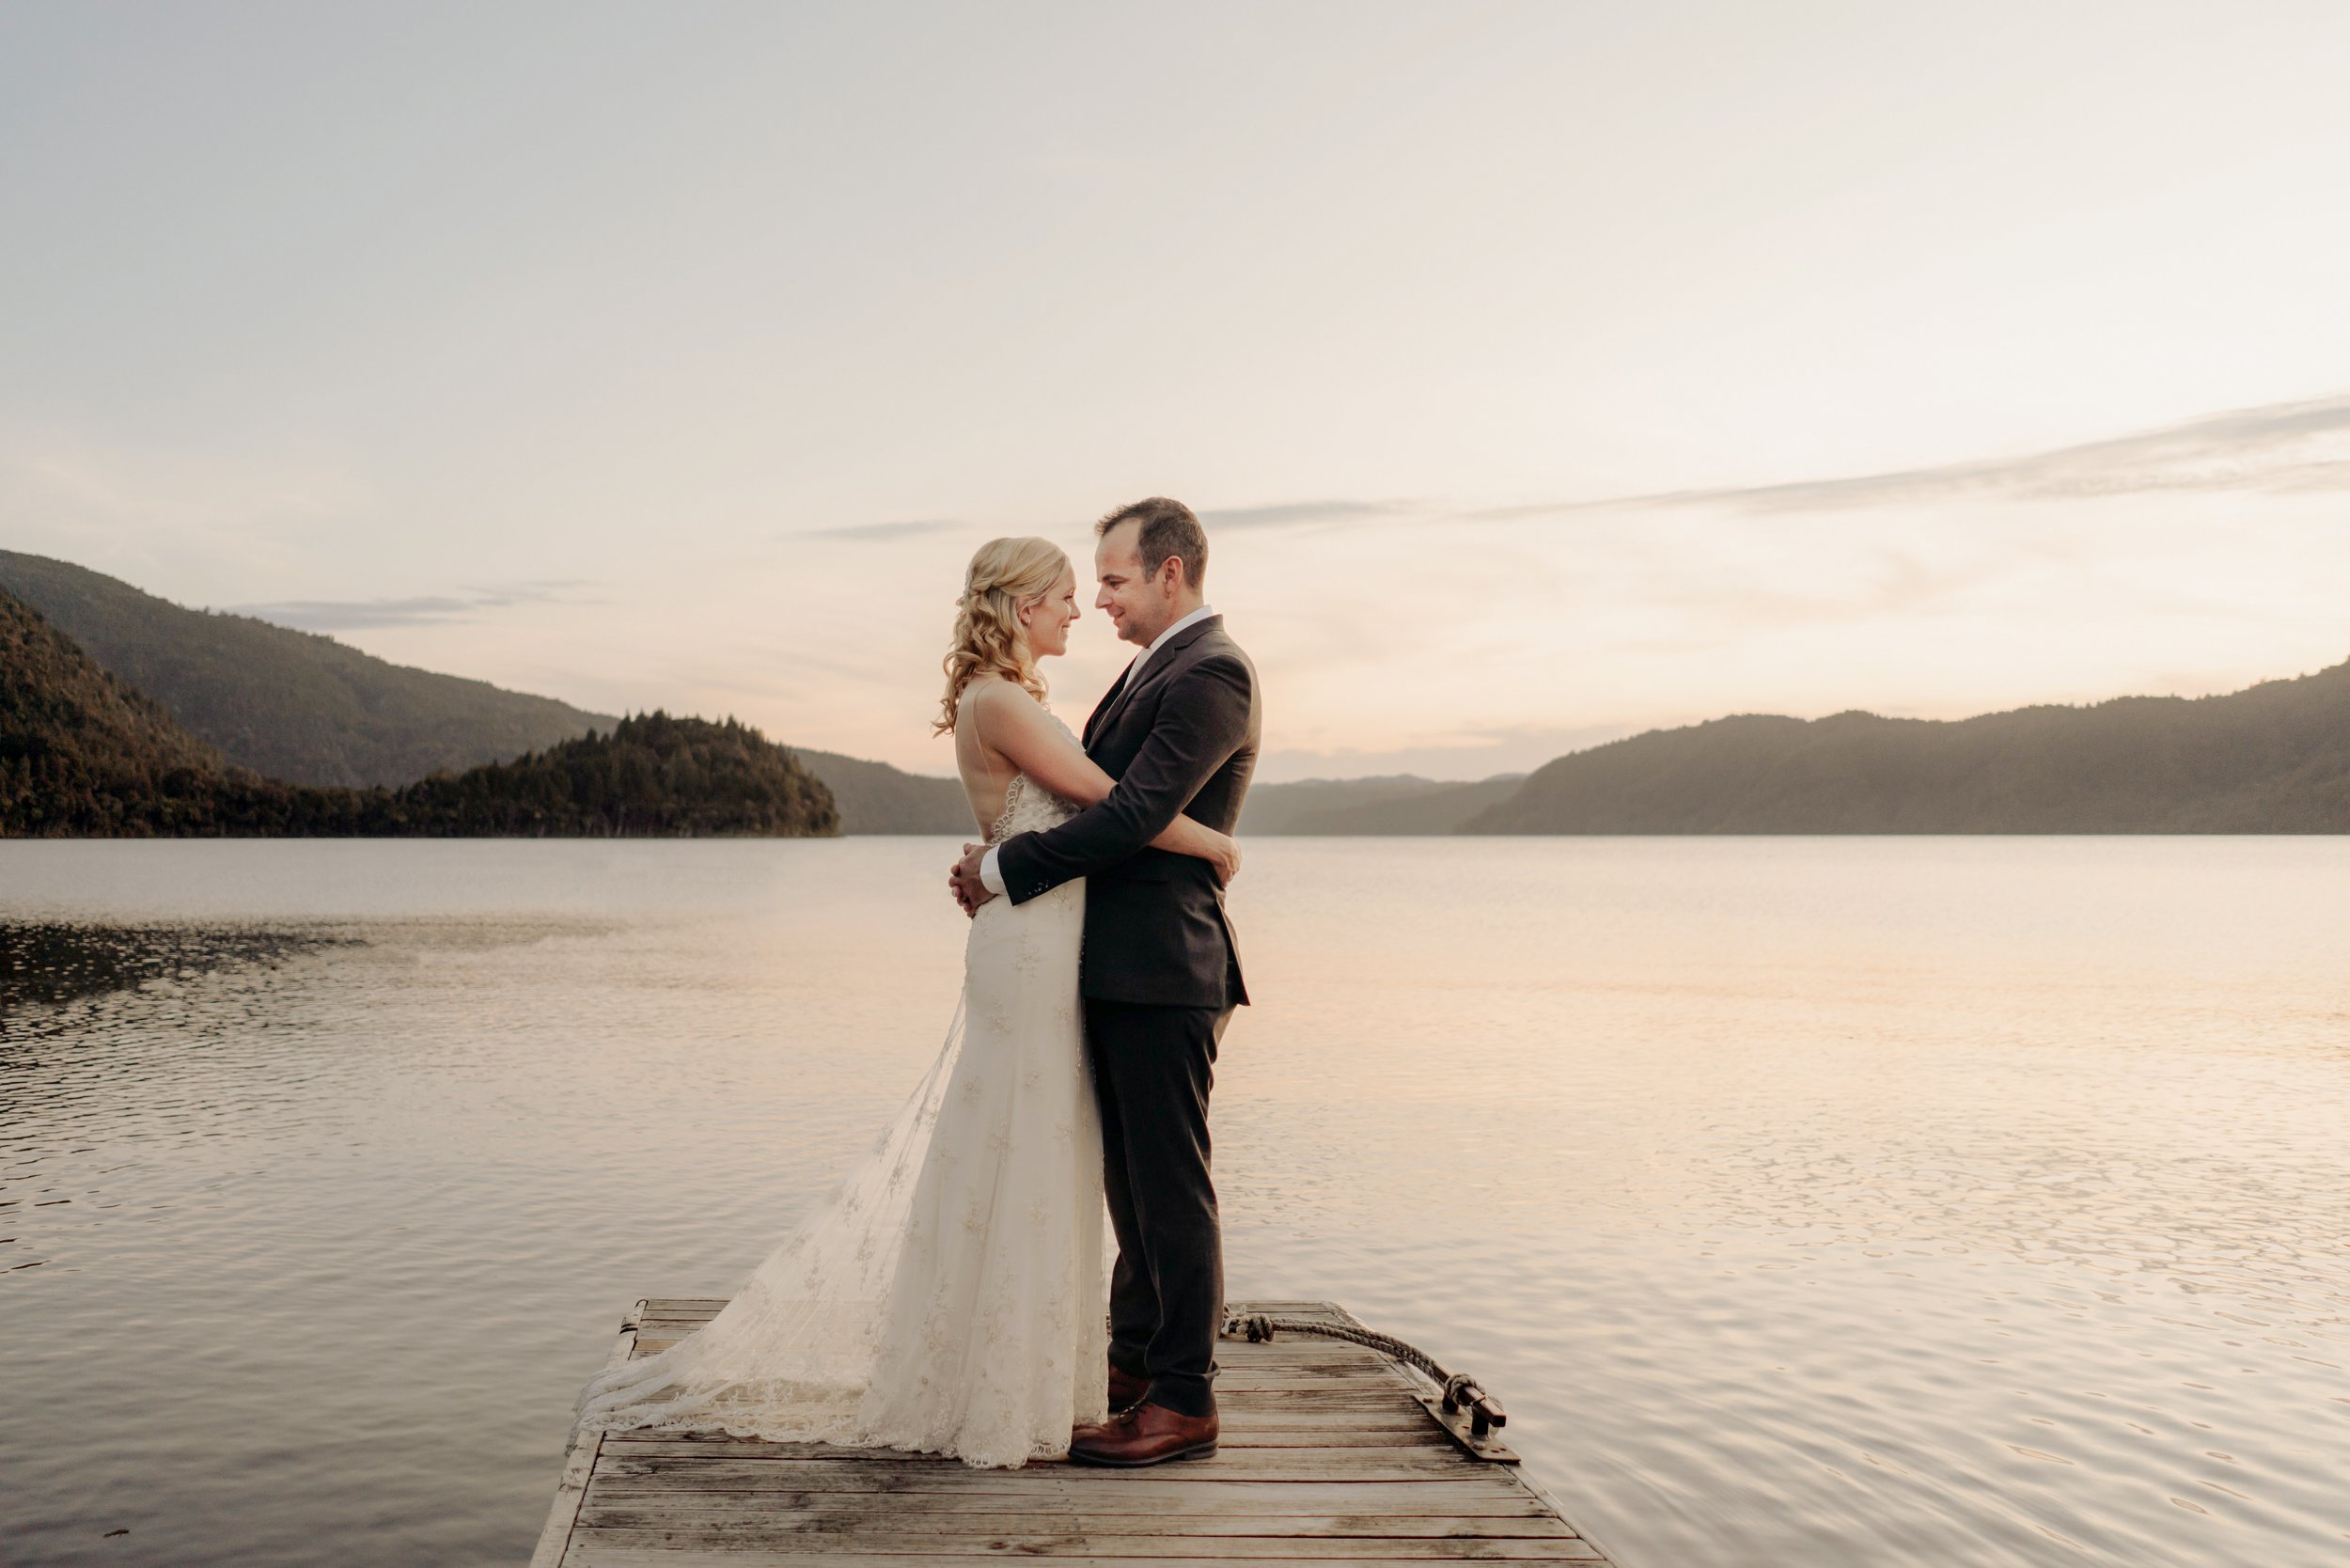  Lakes Lodge Lake Okataina Rotorua Wedding 